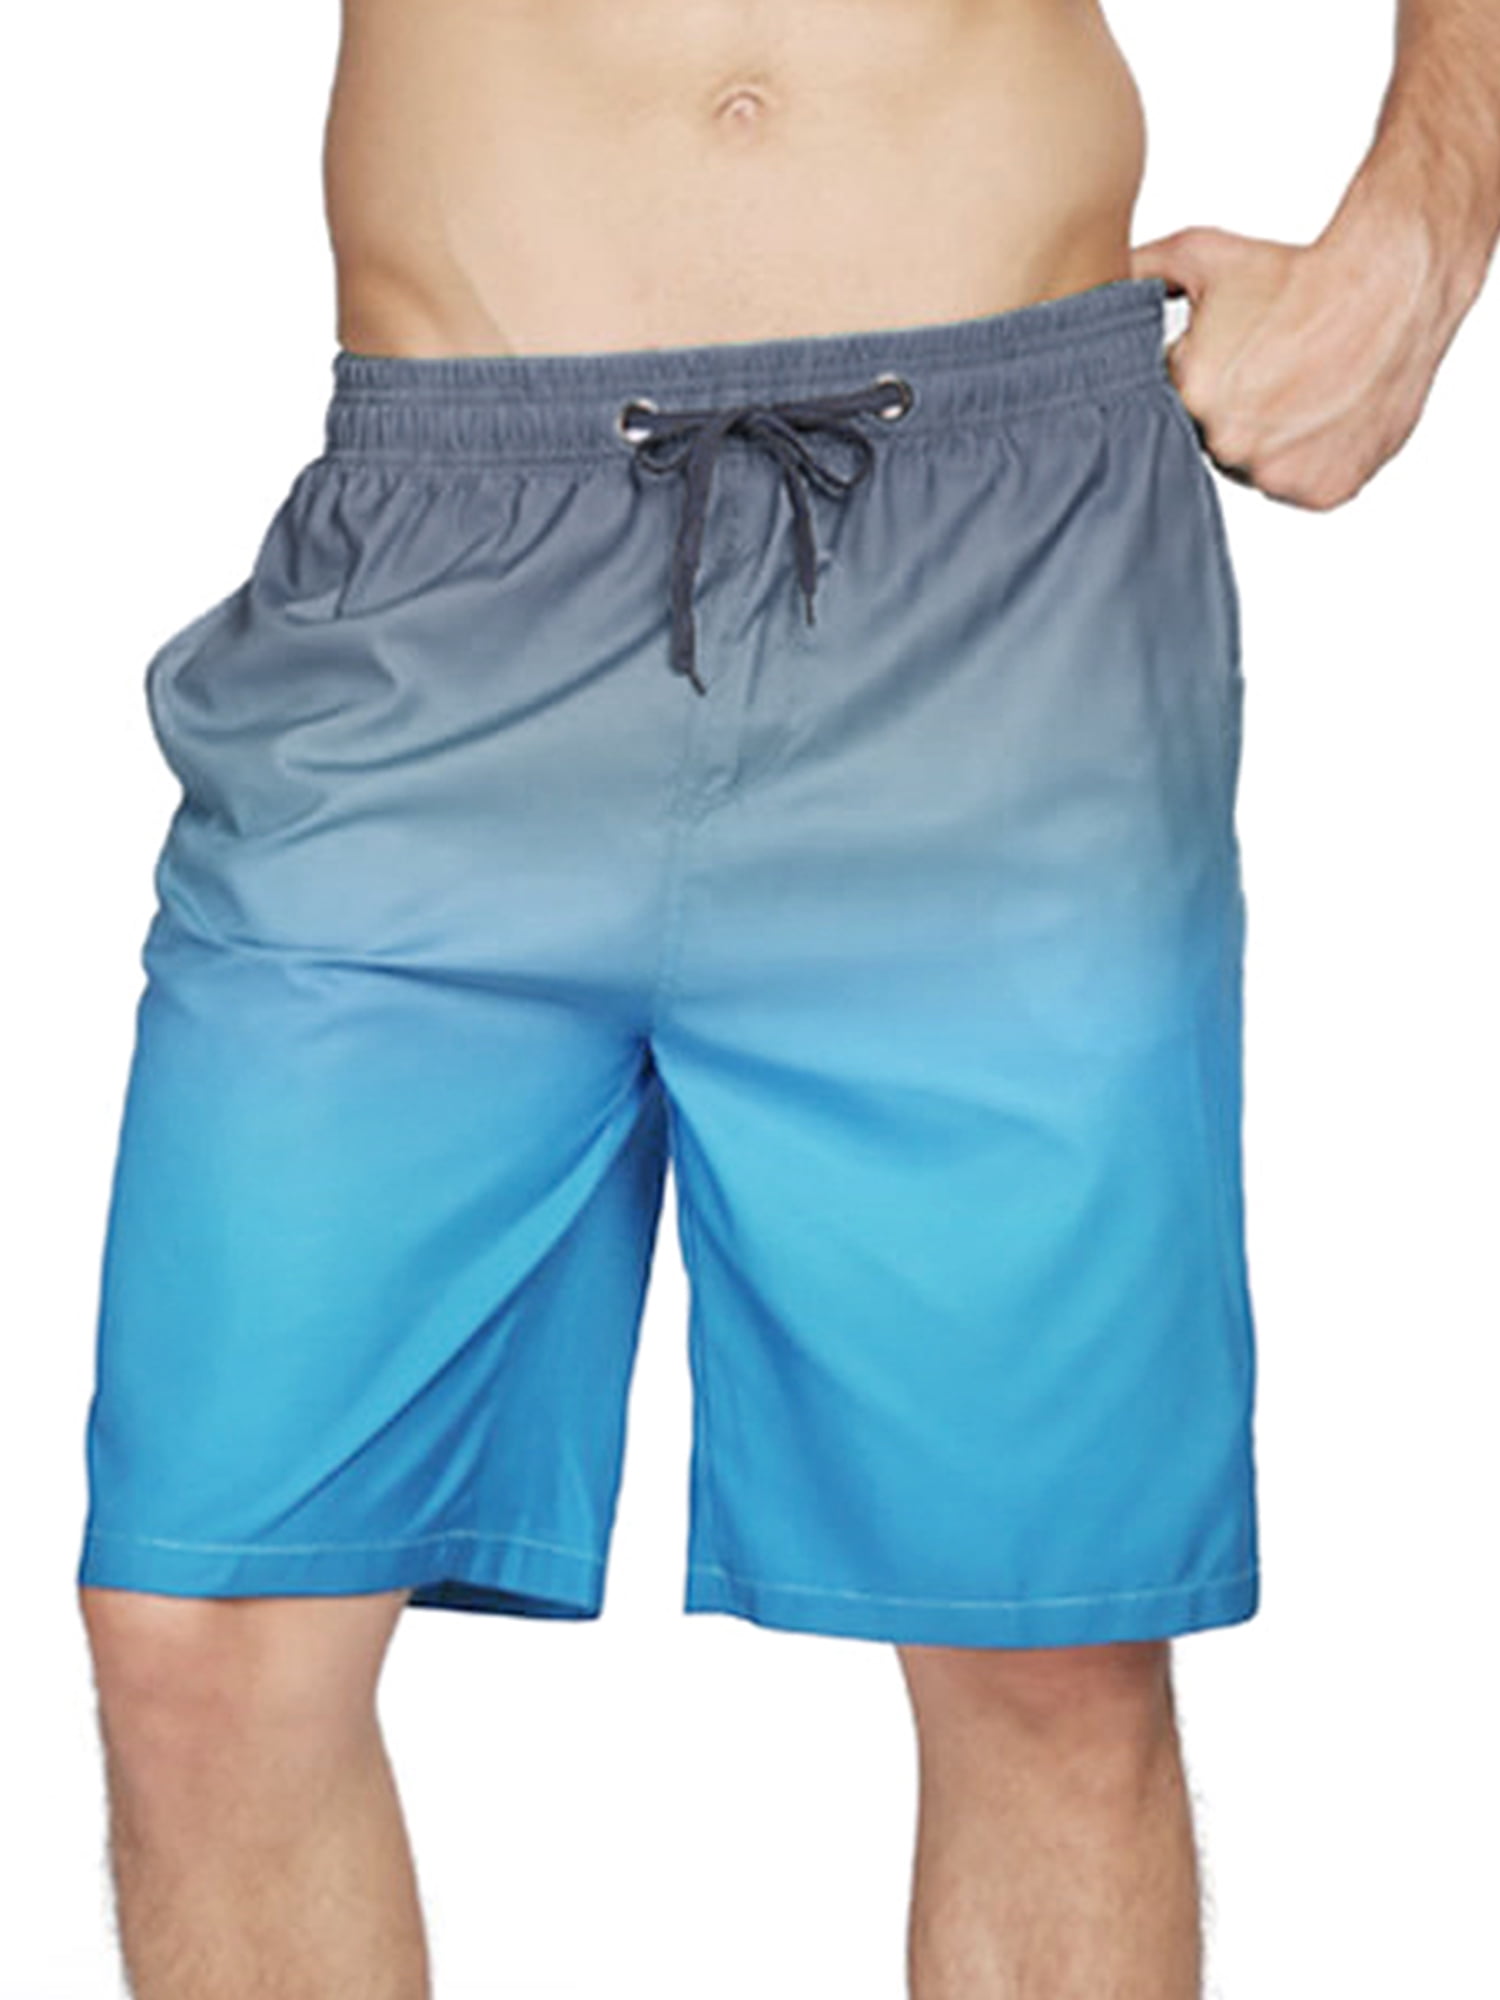 Mens Birds Color Pattern Shorts Lightweight Swim Trunks Beach Shorts,Boardshort